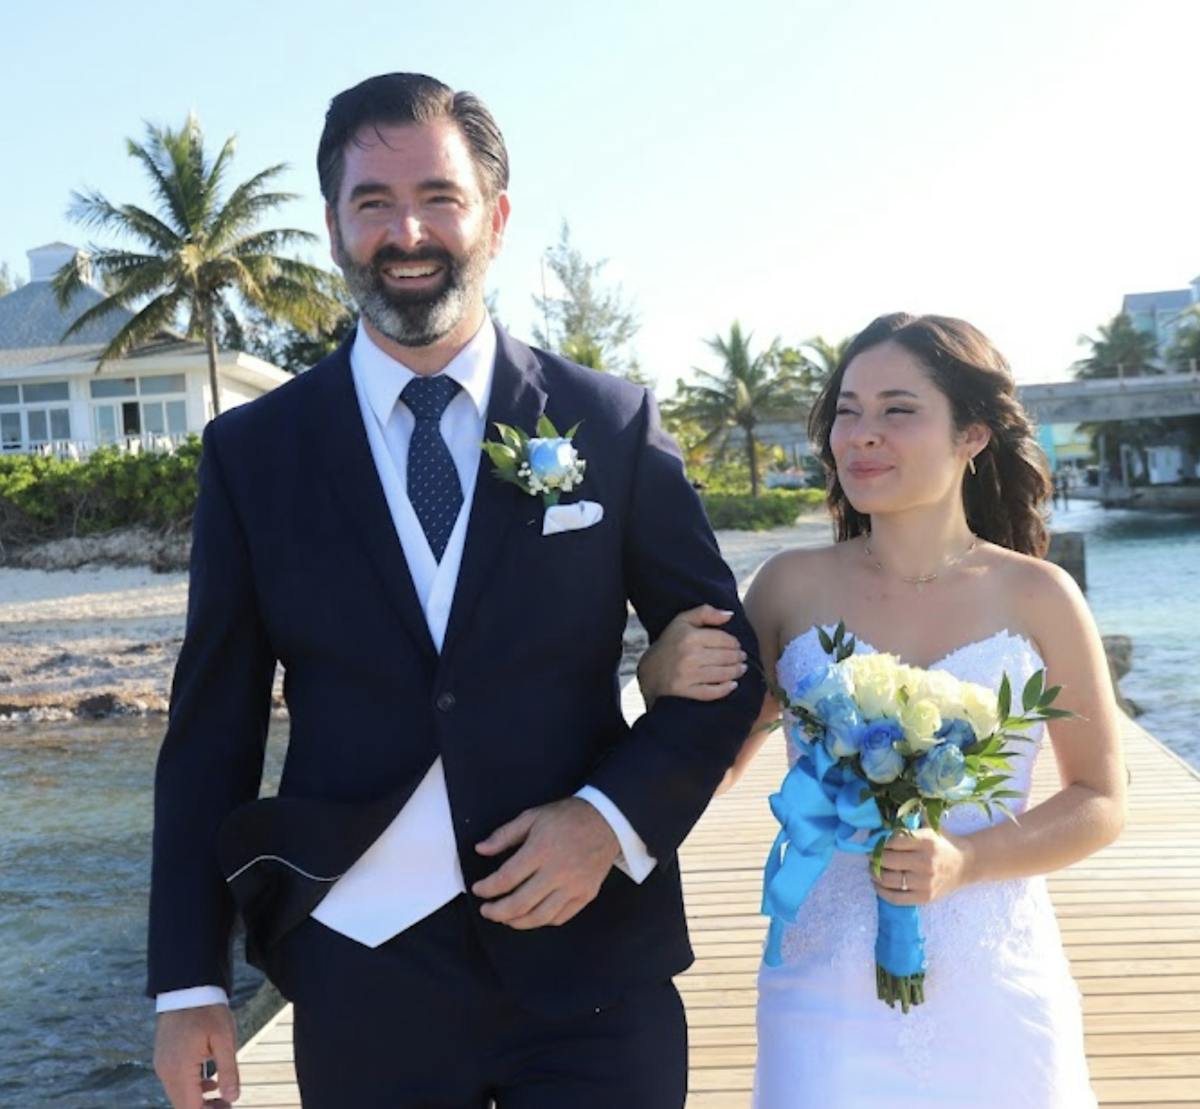 Bahamas wedding for two